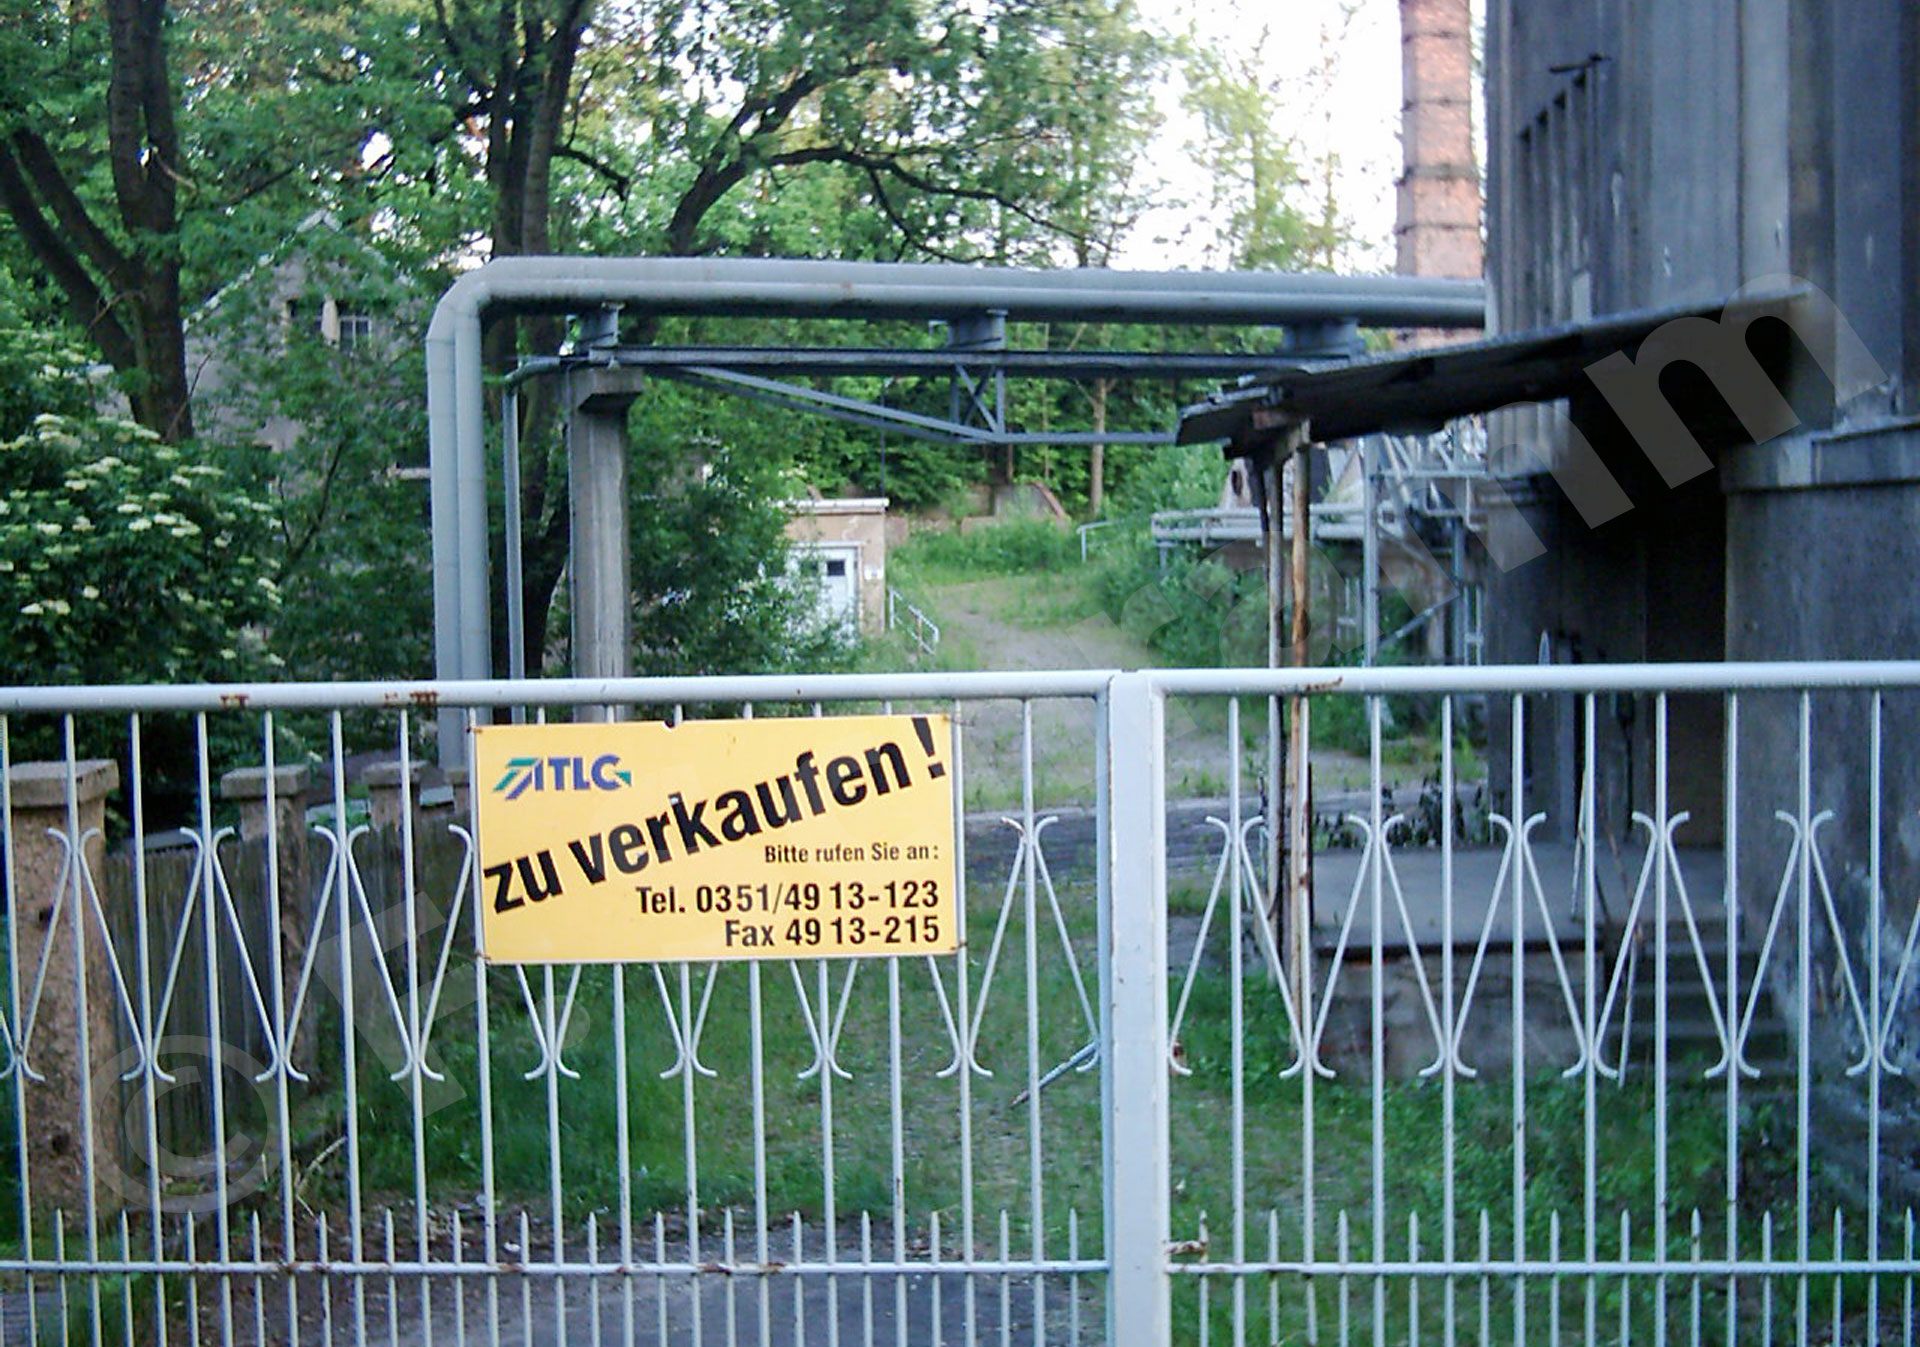 "GROMA zu verkaufen" - Schild am Tor des Nebeneingangs 2003